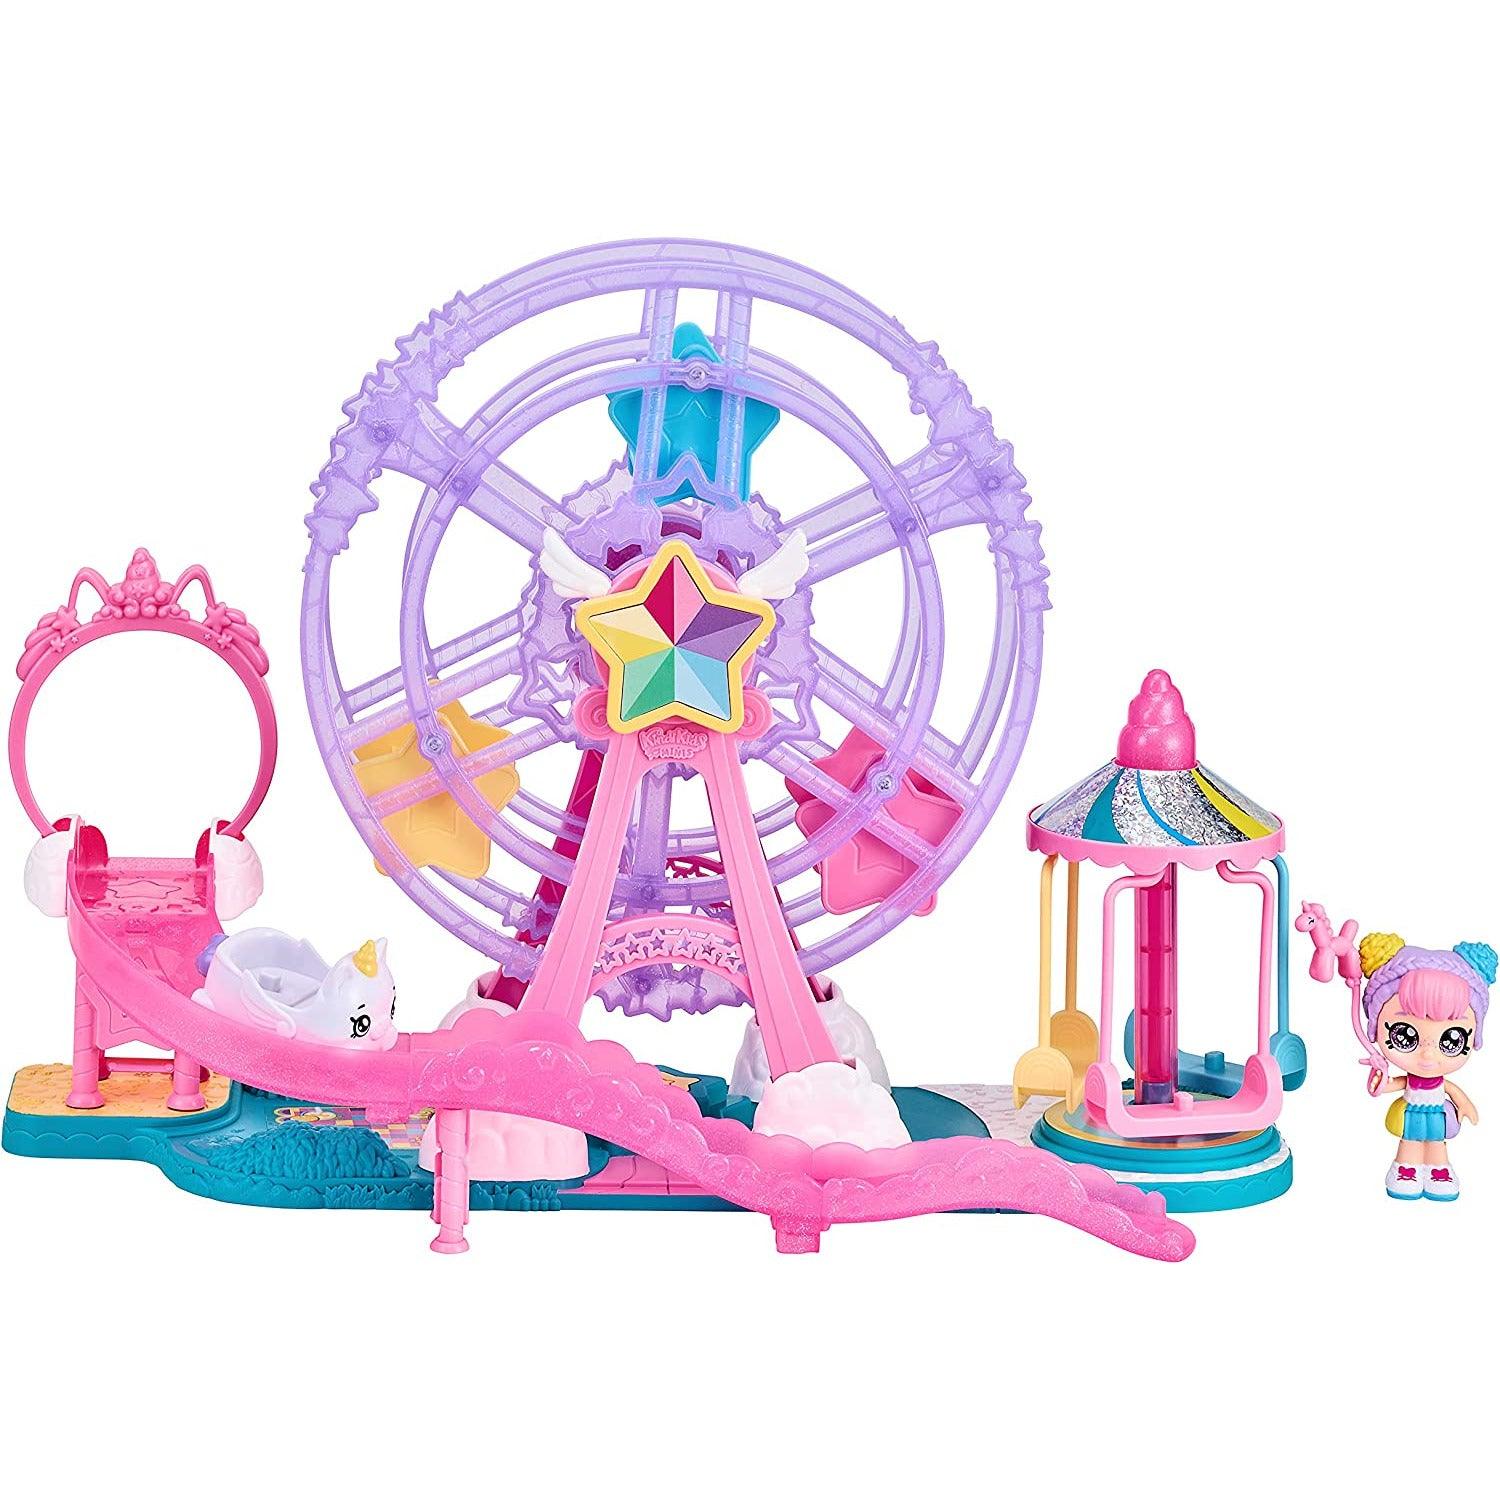 Kindi Kids Minis Collectible Ferris Wheel and Posable Bobble Head Figurine 2pc - BumbleToys - 5-7 Years, Fashion Dolls & Accessories, Girls, Kindi Kids, Pre-Order